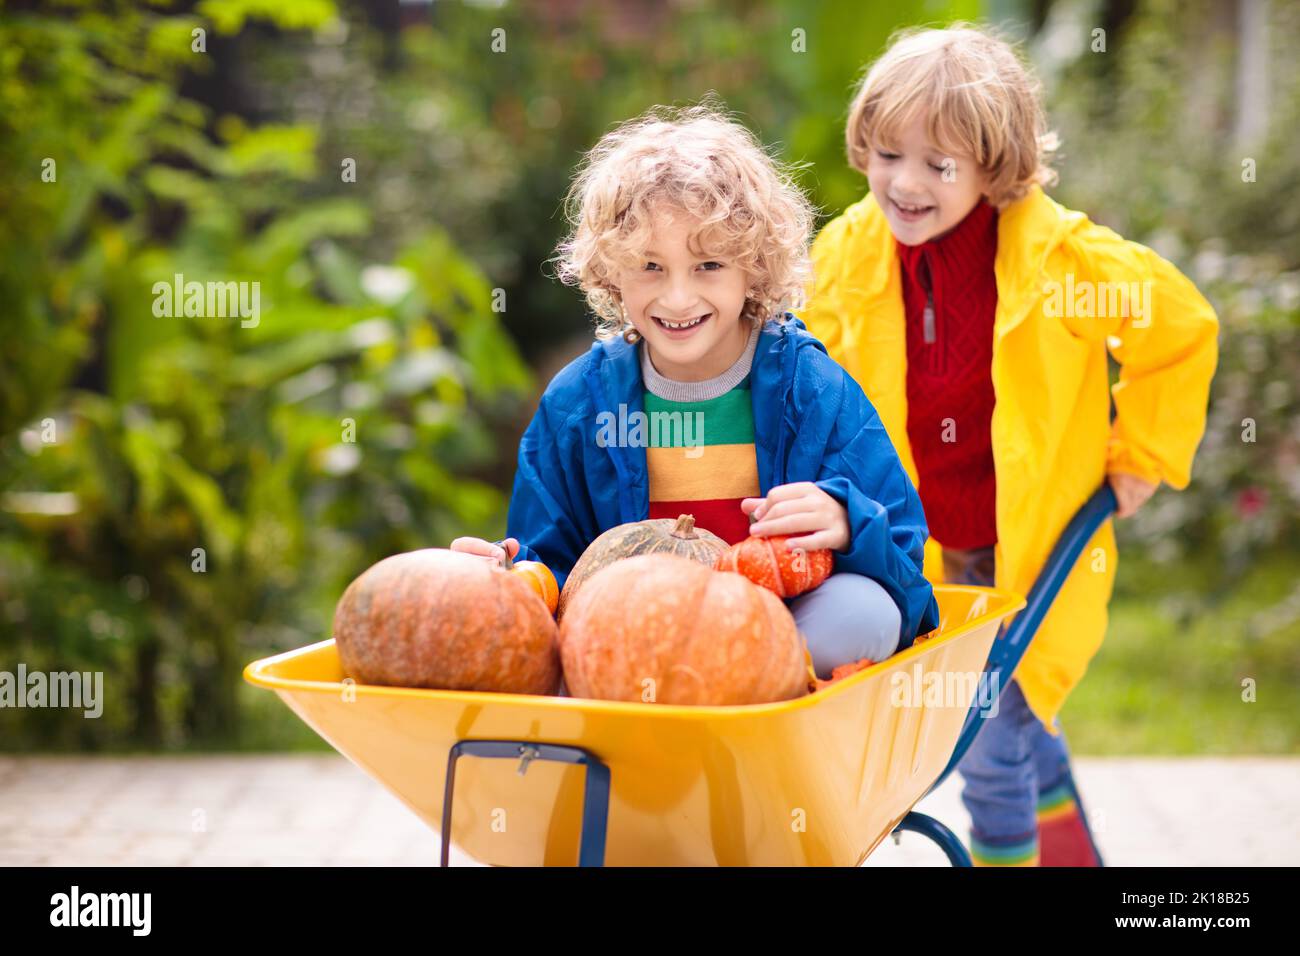 Kids in wheelbarrow on pumpkin patch. Autumn outdoor fun for children in Thanksgiving and Halloween season. Boy pushing wheel barrow on farm field. Ch Stock Photo